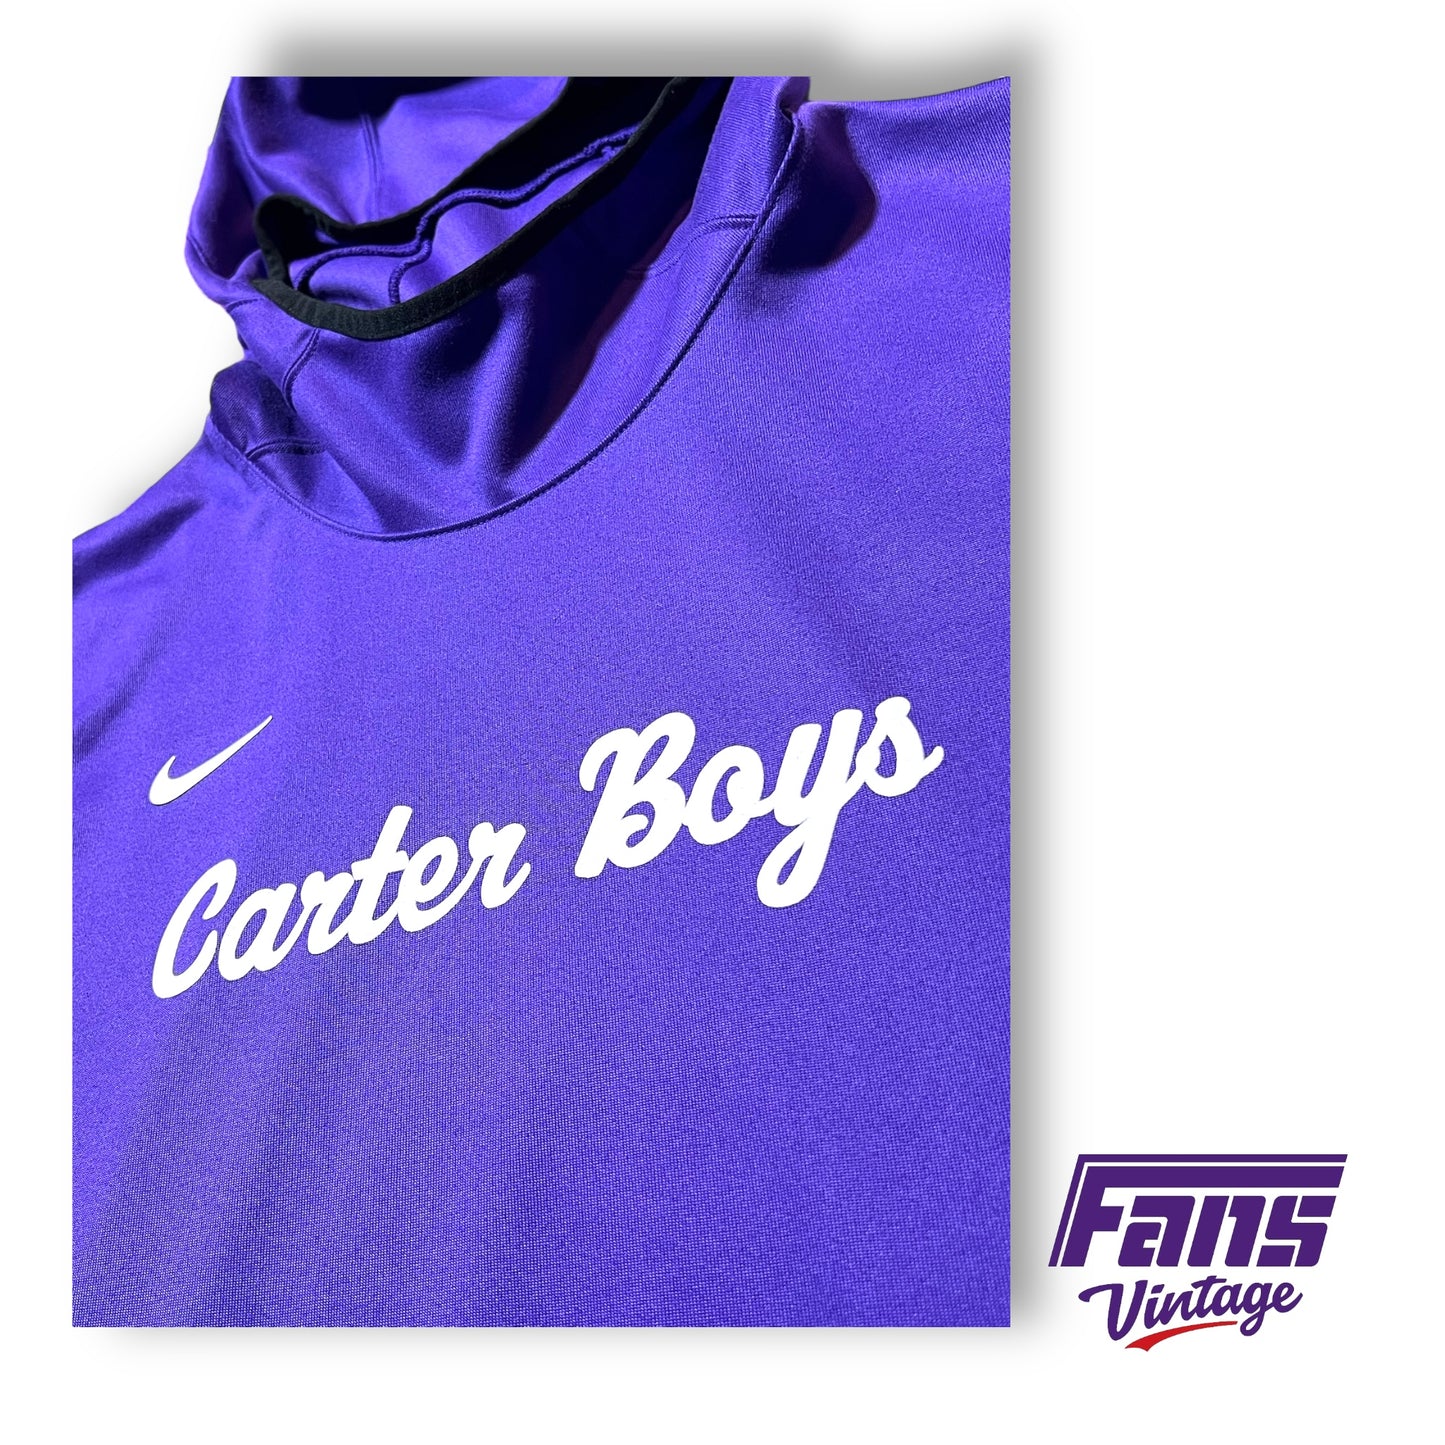 RARE - TCU Football Team Exclusive “Carter Boys” Nike Premium Short sleeve Hoodie